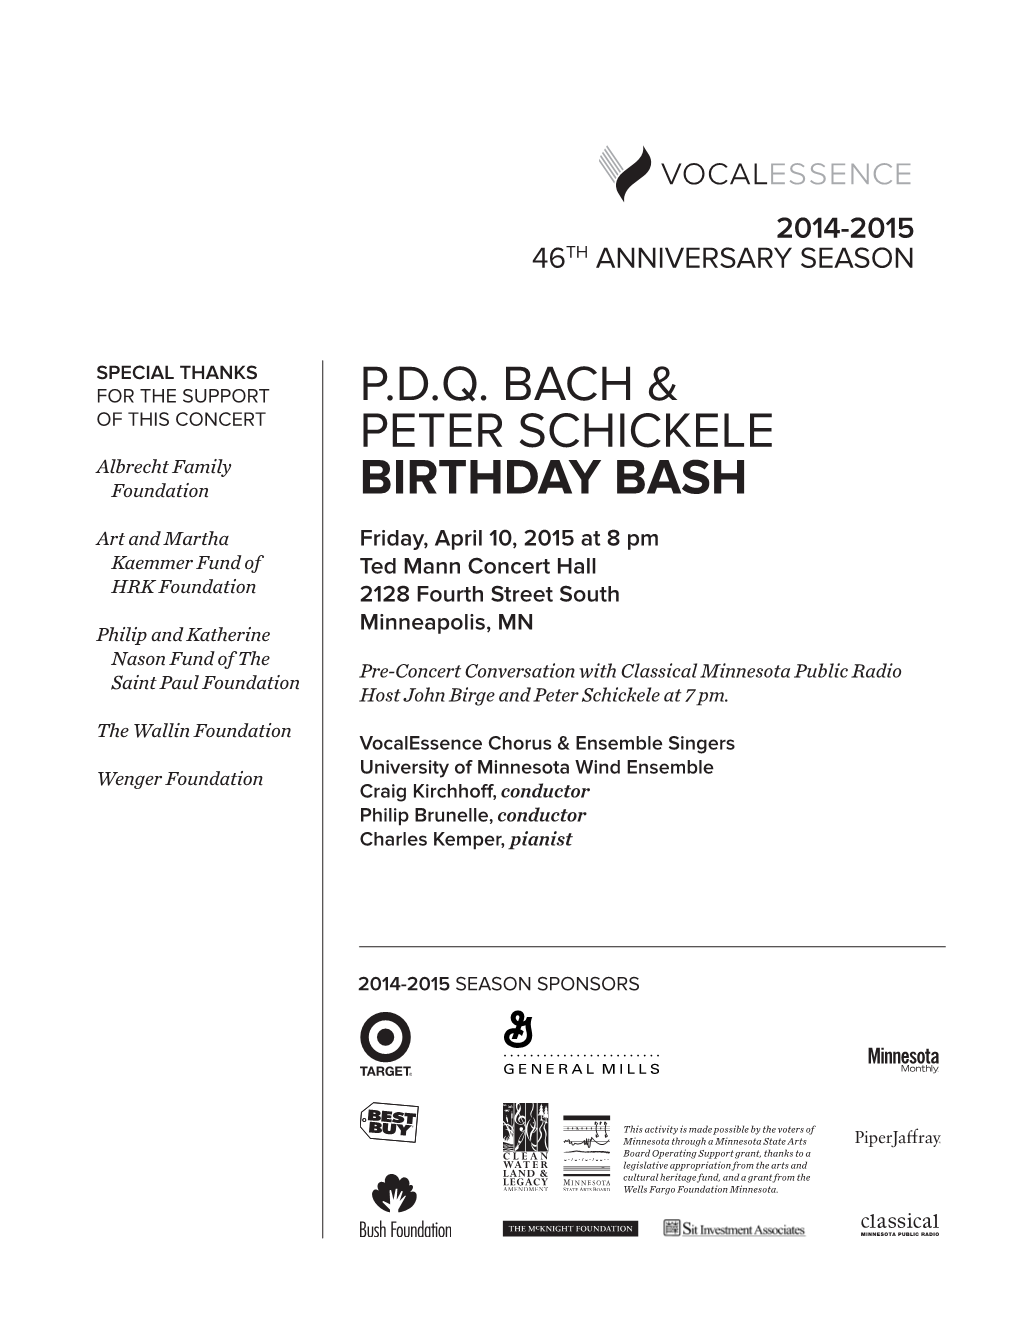 P.D.Q. Bach & Peter Schickele Birthday Bash